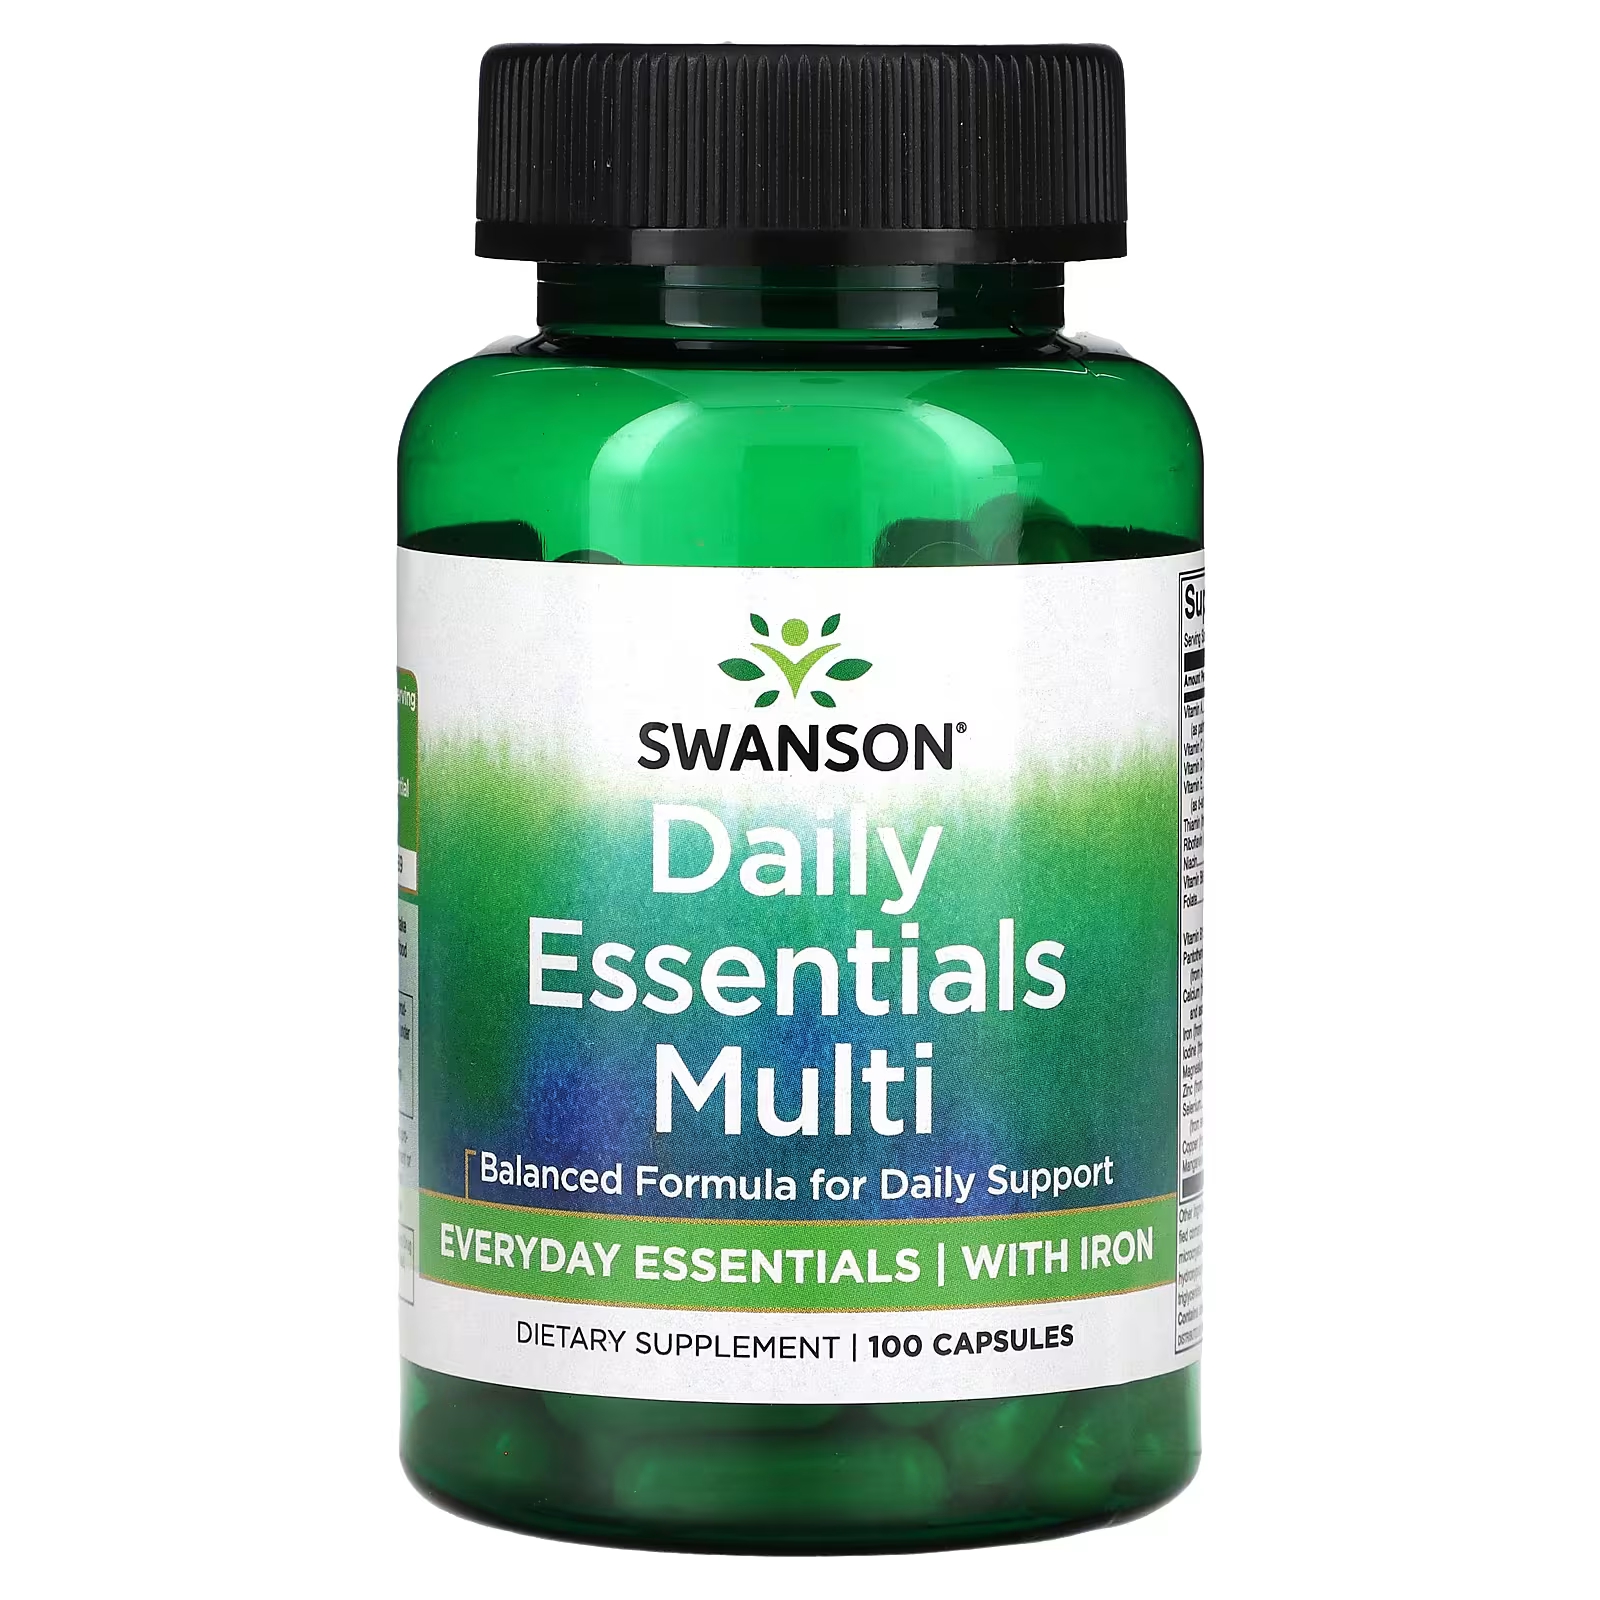 Пищевая добавка Swanson Daily Essentials Multi, 100 капсул swanson формула для поддержки сухожилий 60 капсул